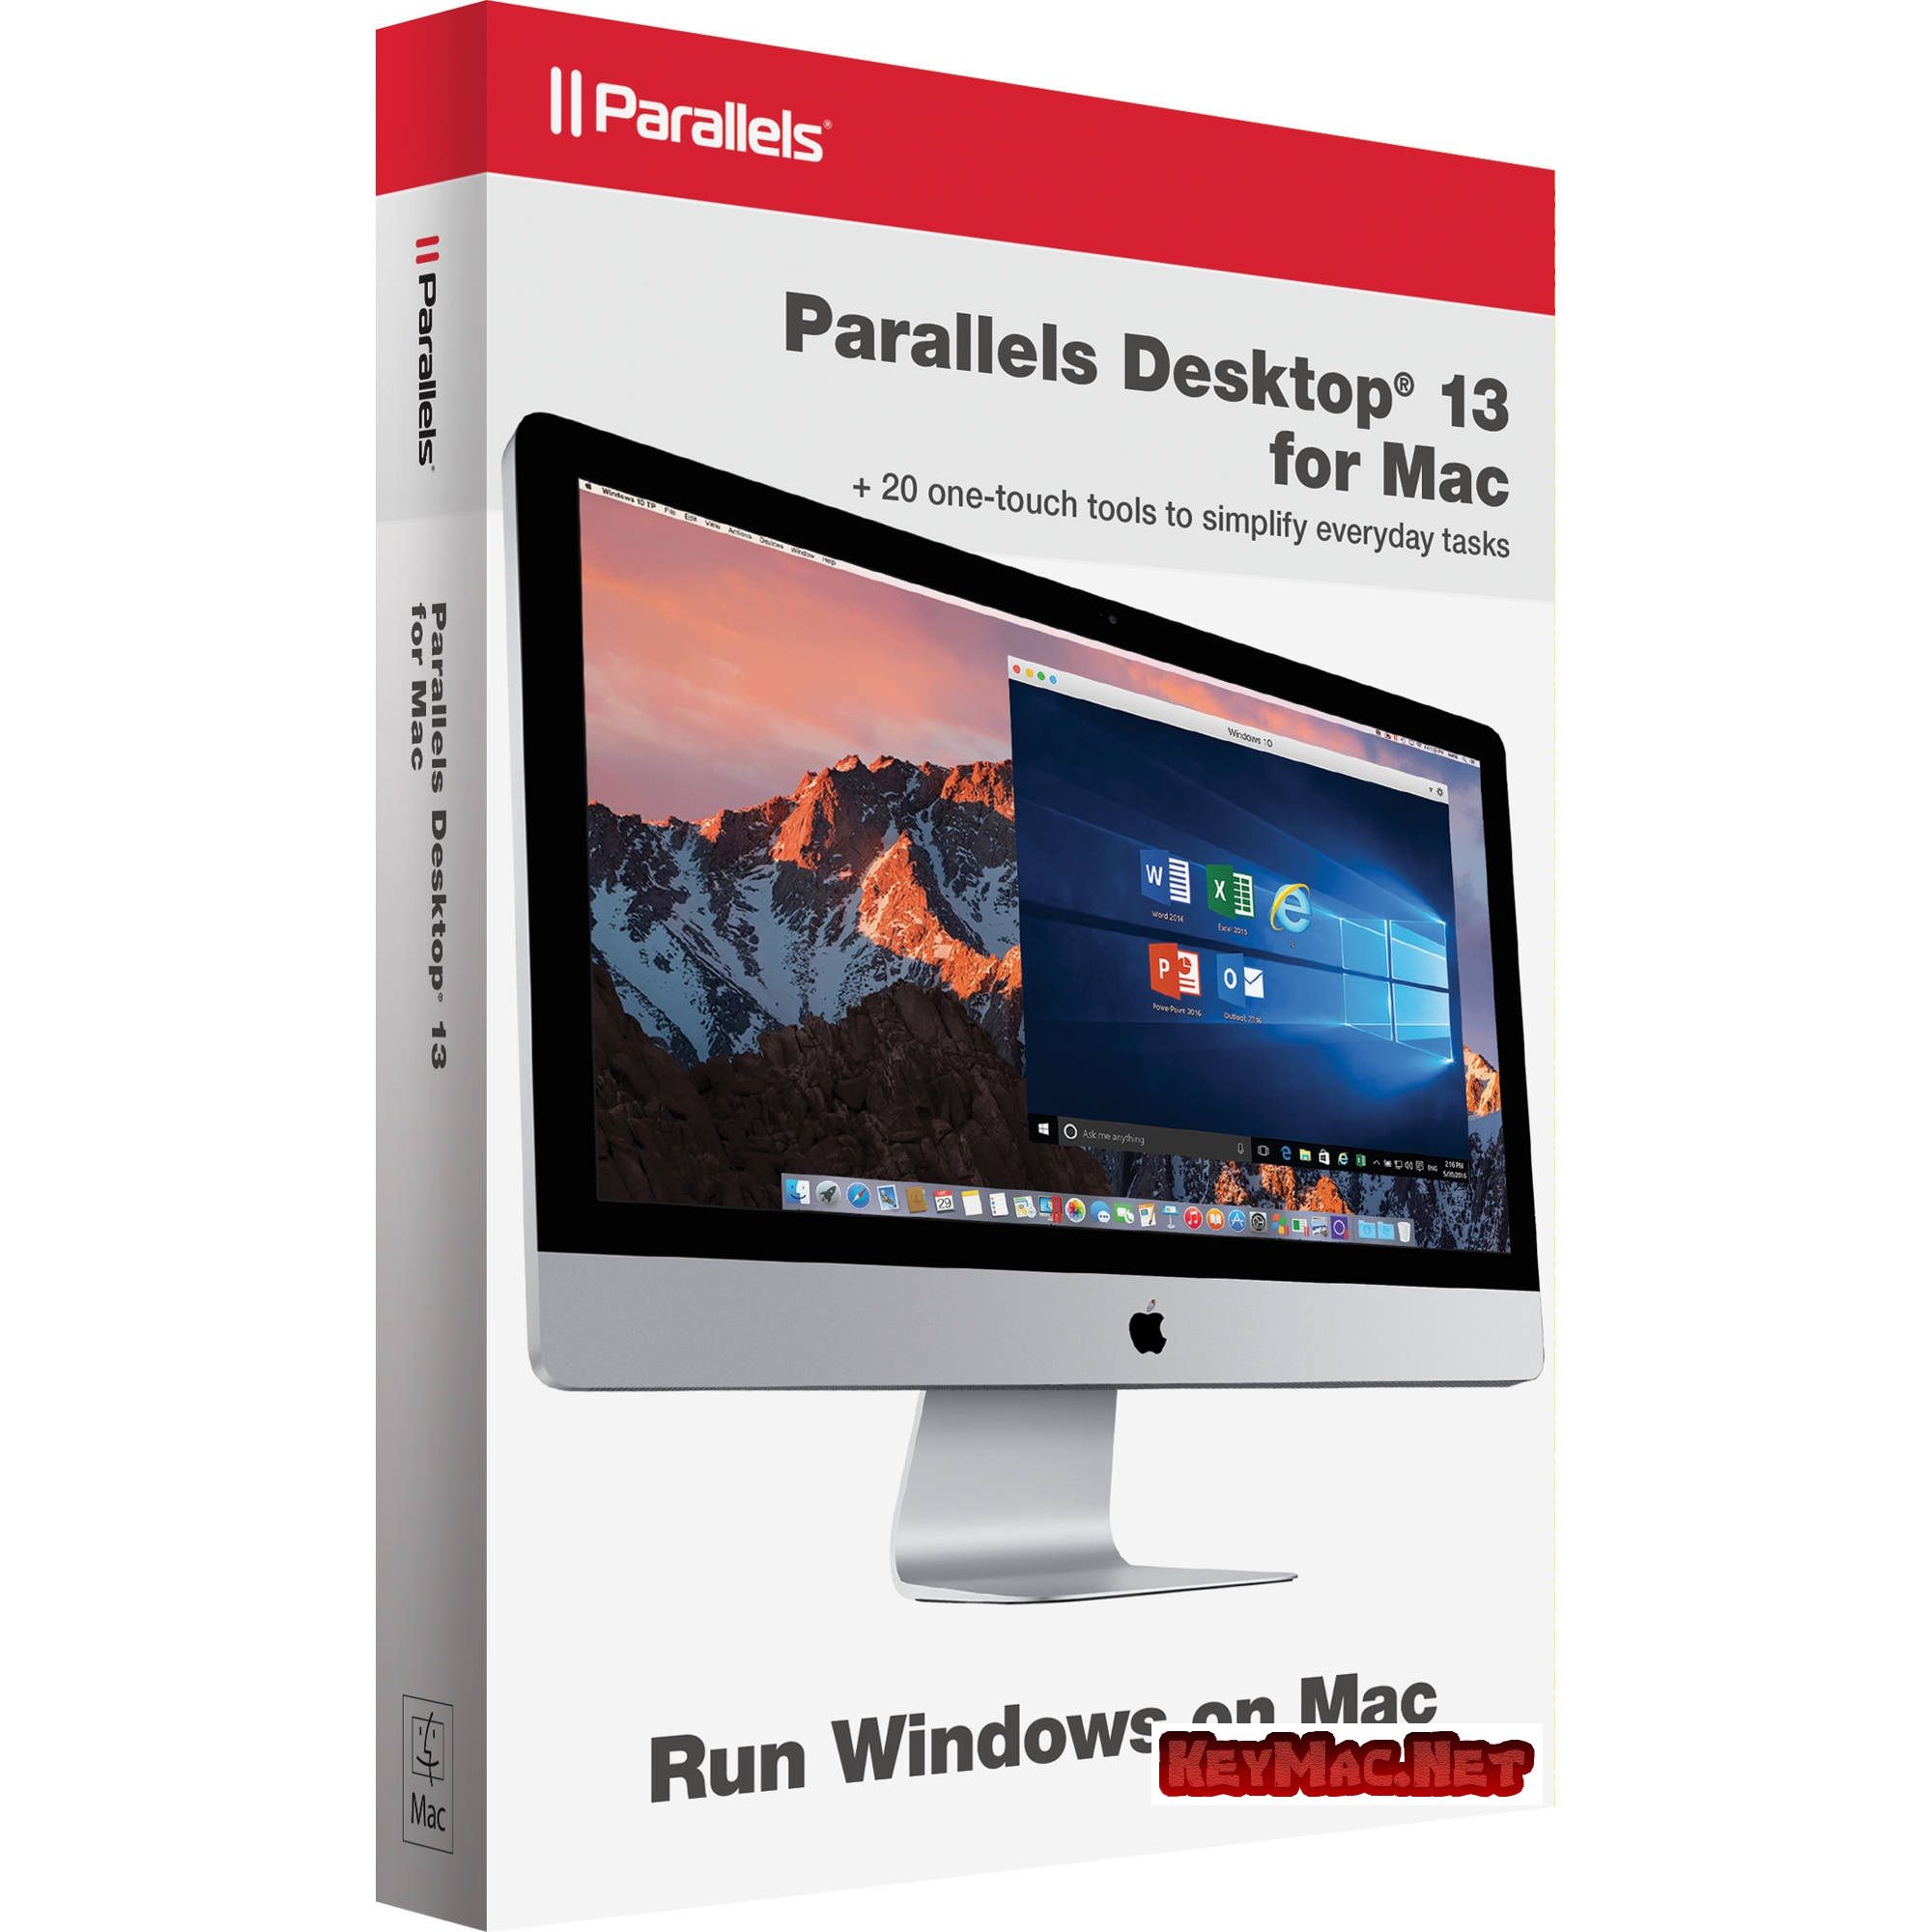 Parallels desktop 9 activation key for mac